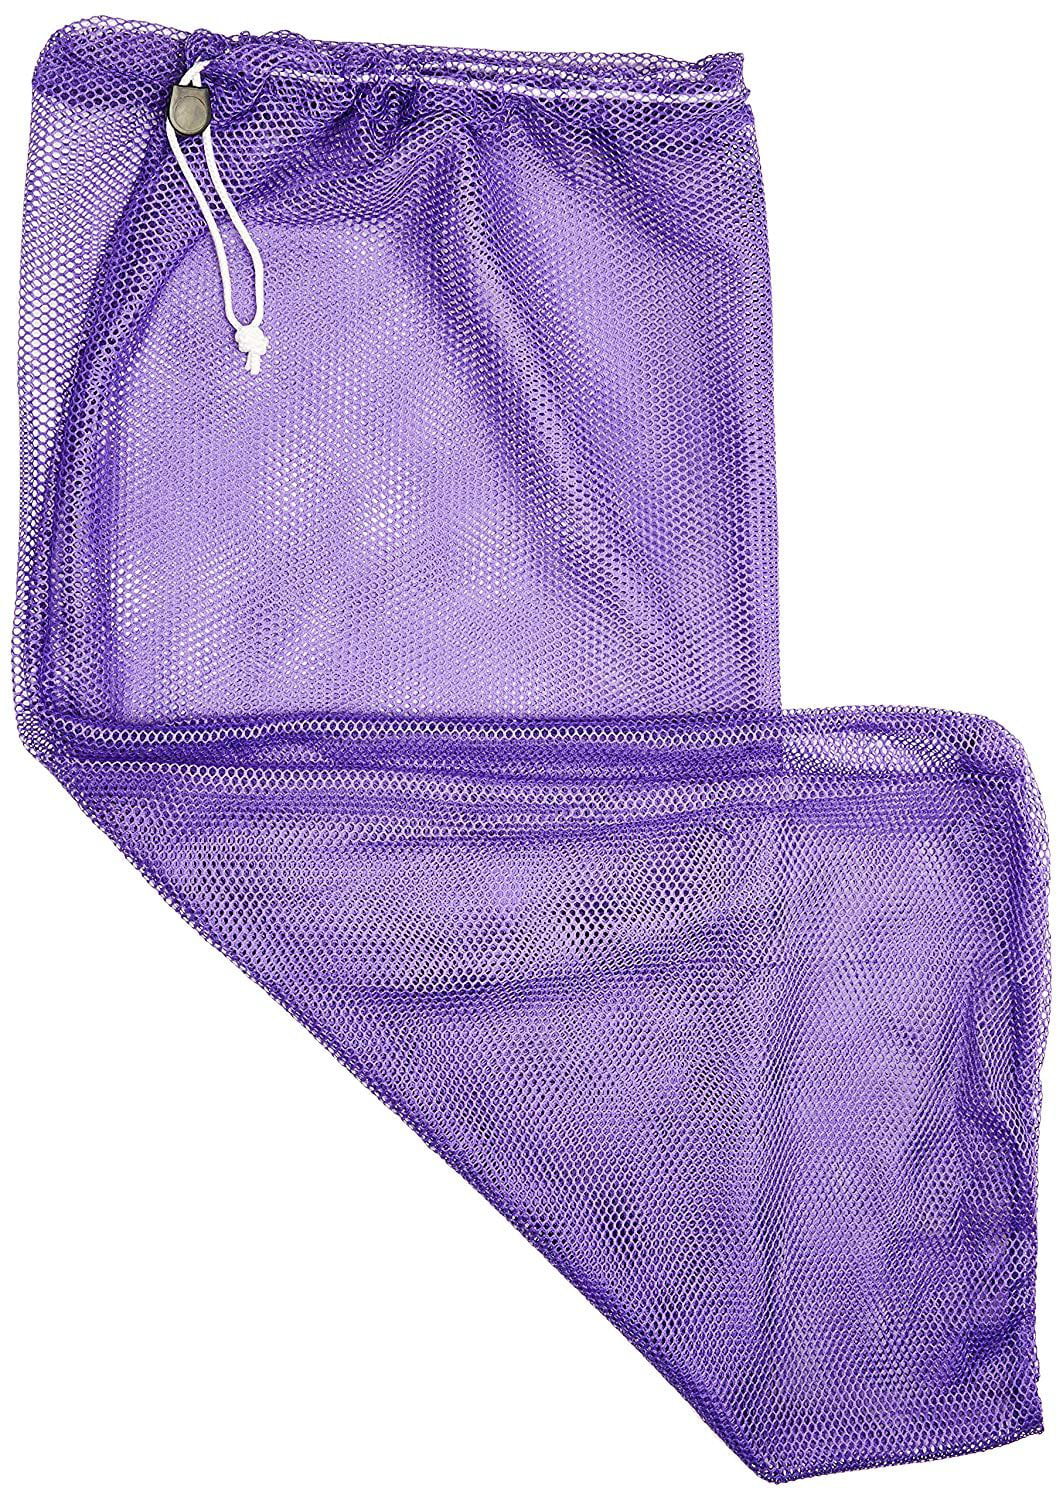 BSN Sports Heavy-Duty Mesh Equipment Bag Purple